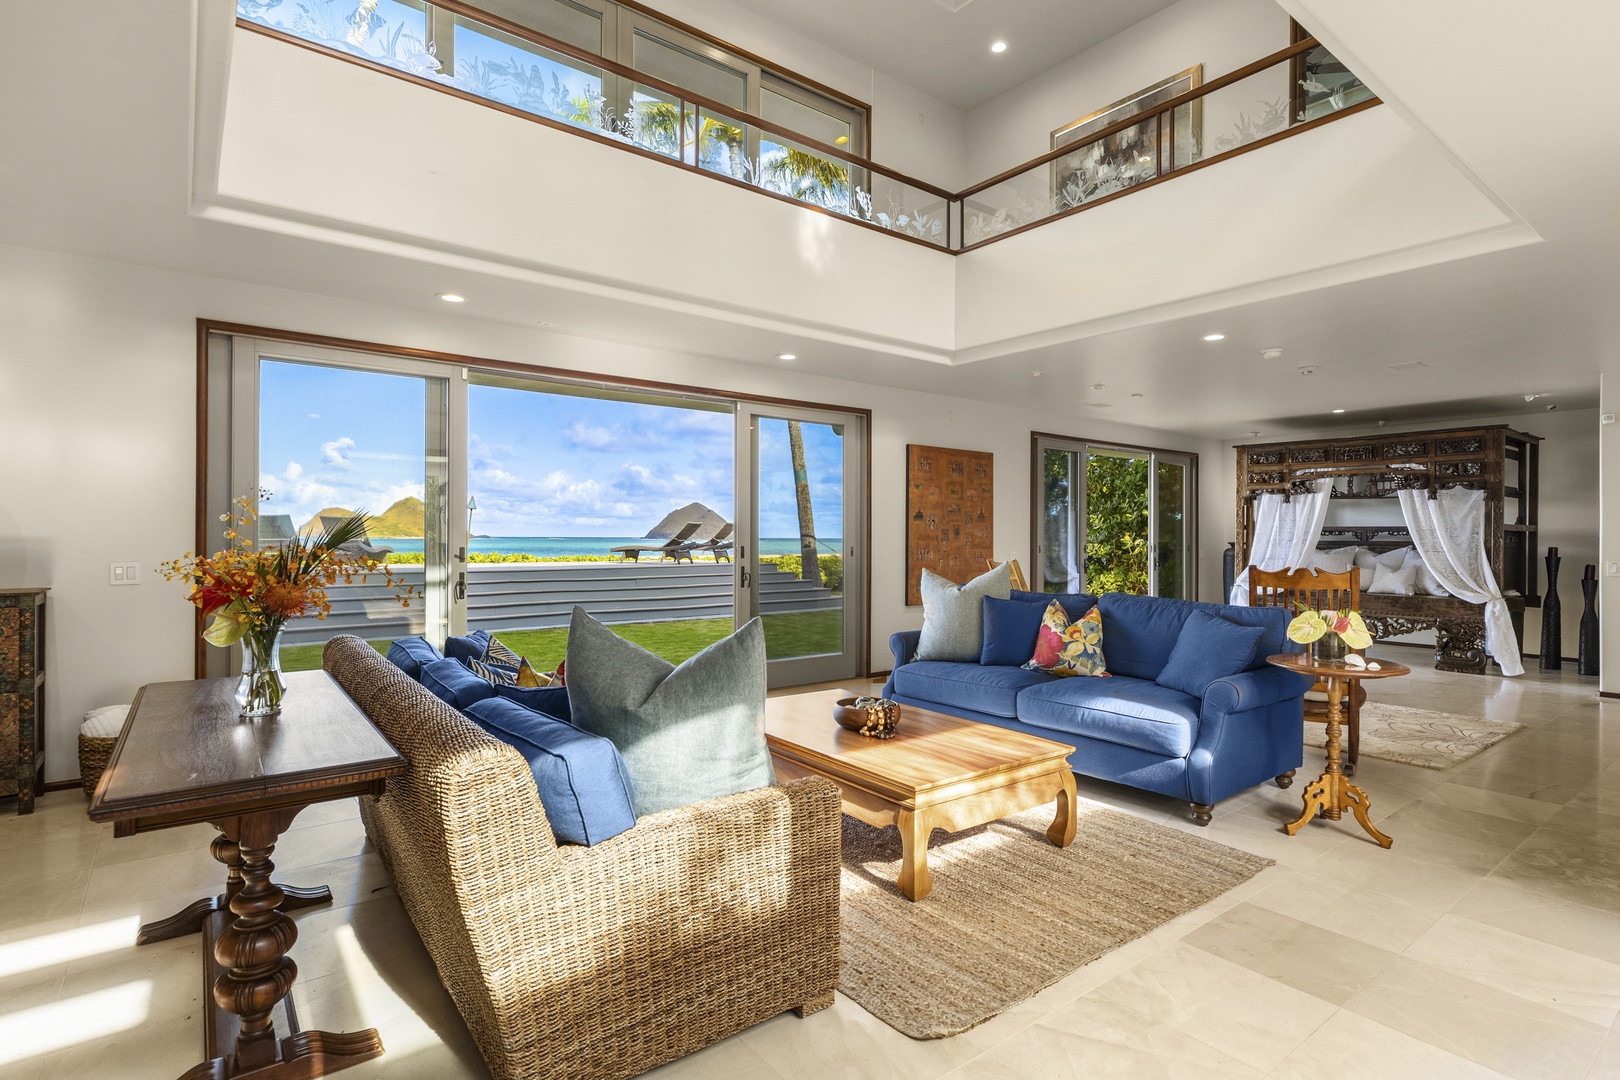 Kailua Vacation Rentals, Mokulua Sunrise - Casual beach style with luxury appeal